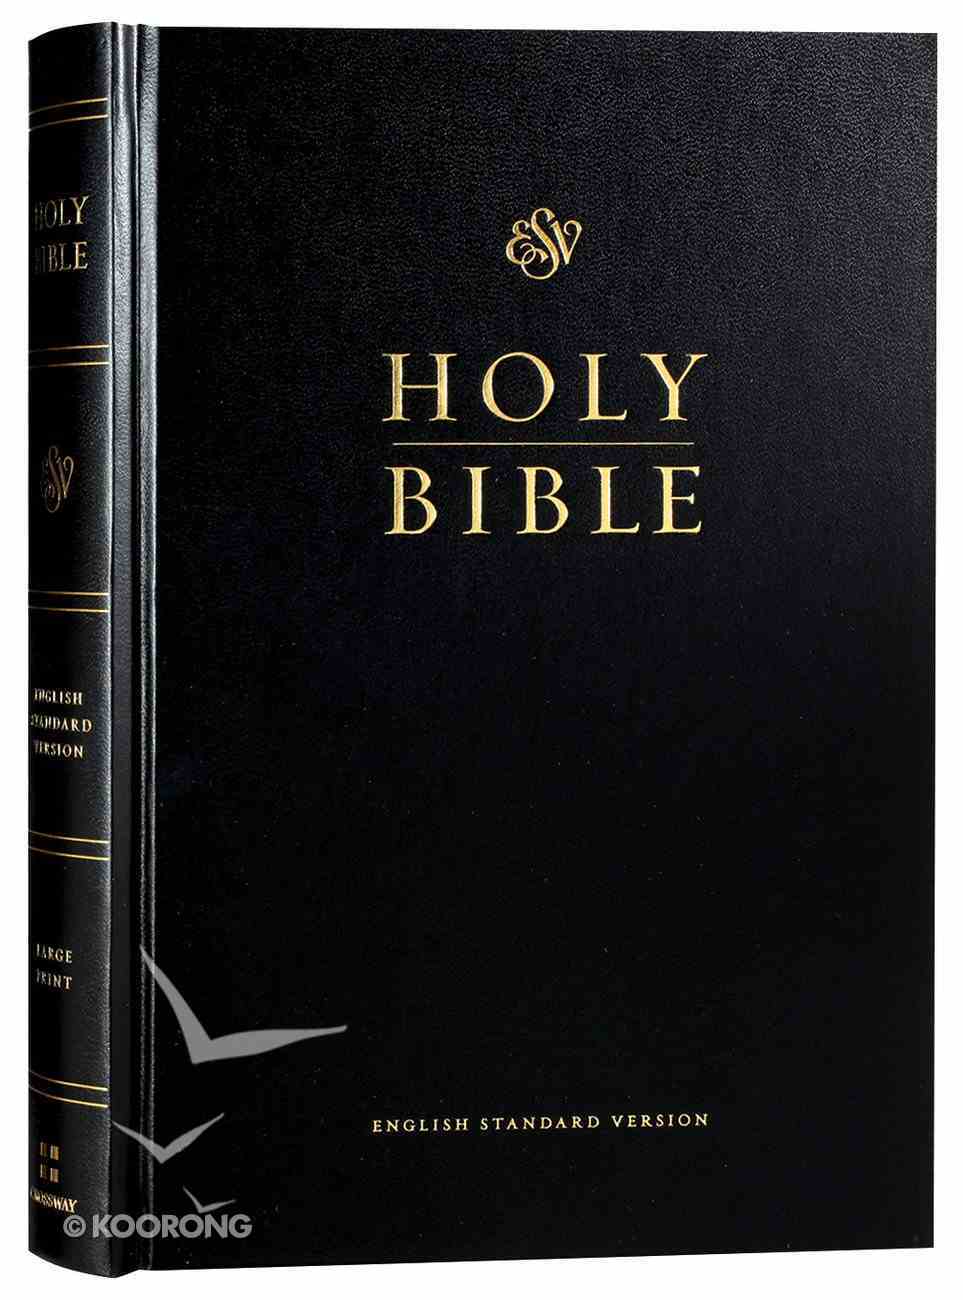 ESV Pew and Worship Bible Large Print Black (Black Letter Edition) Hardback